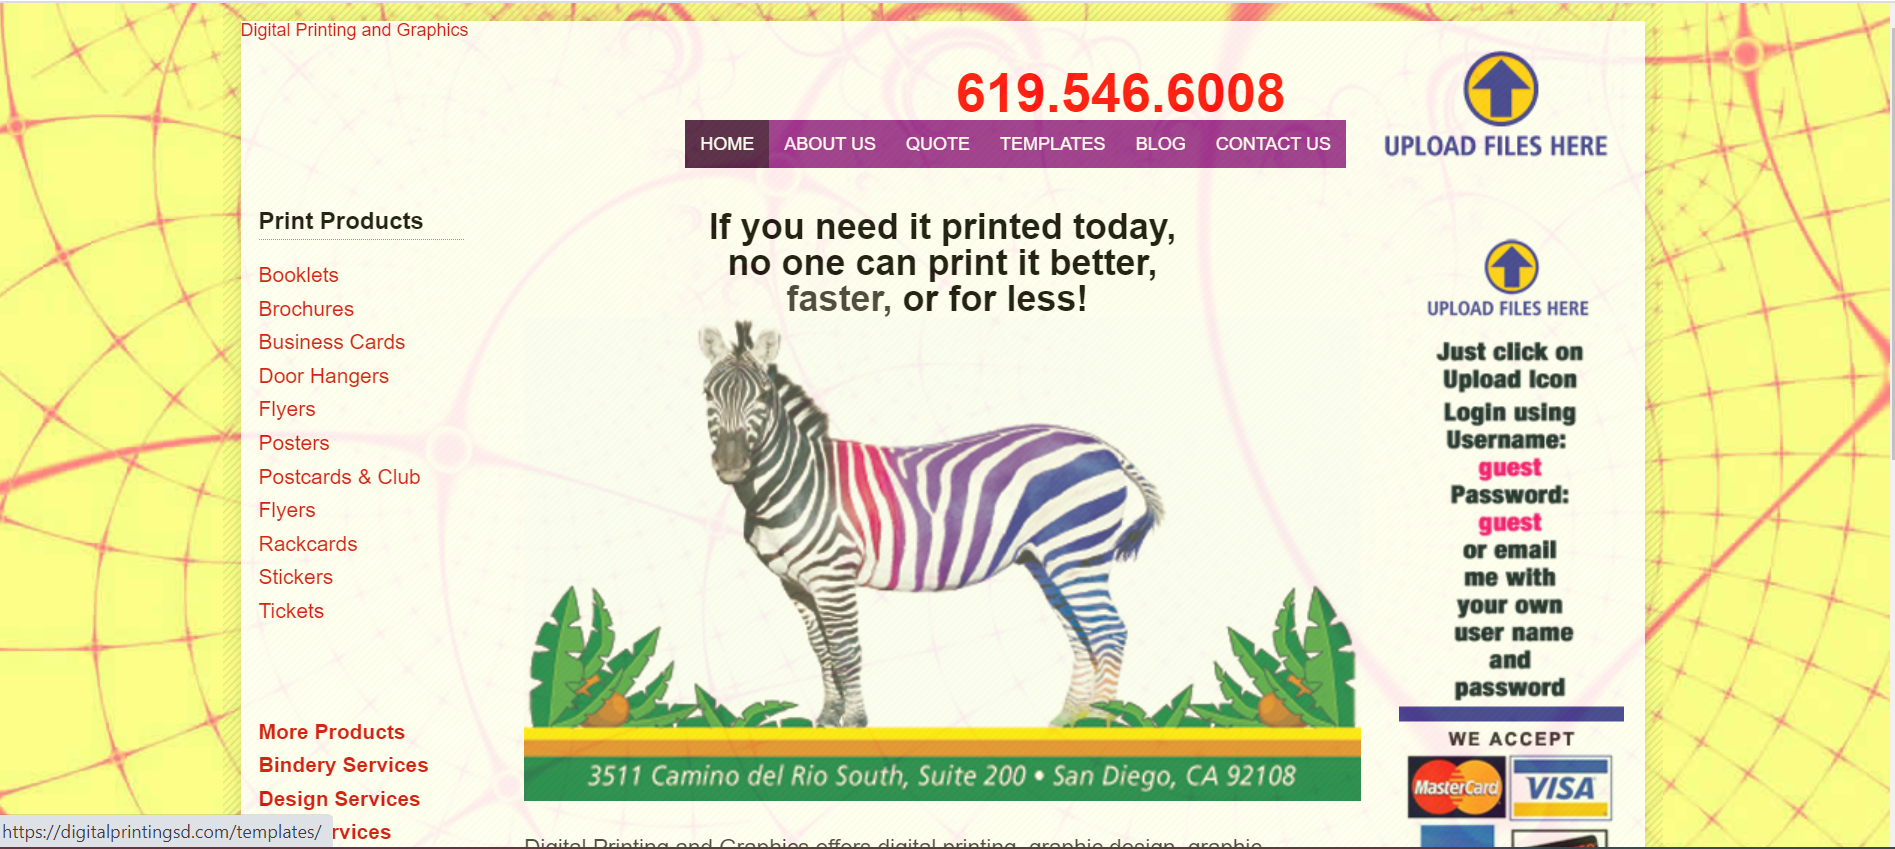 Digital Printing and Graphics